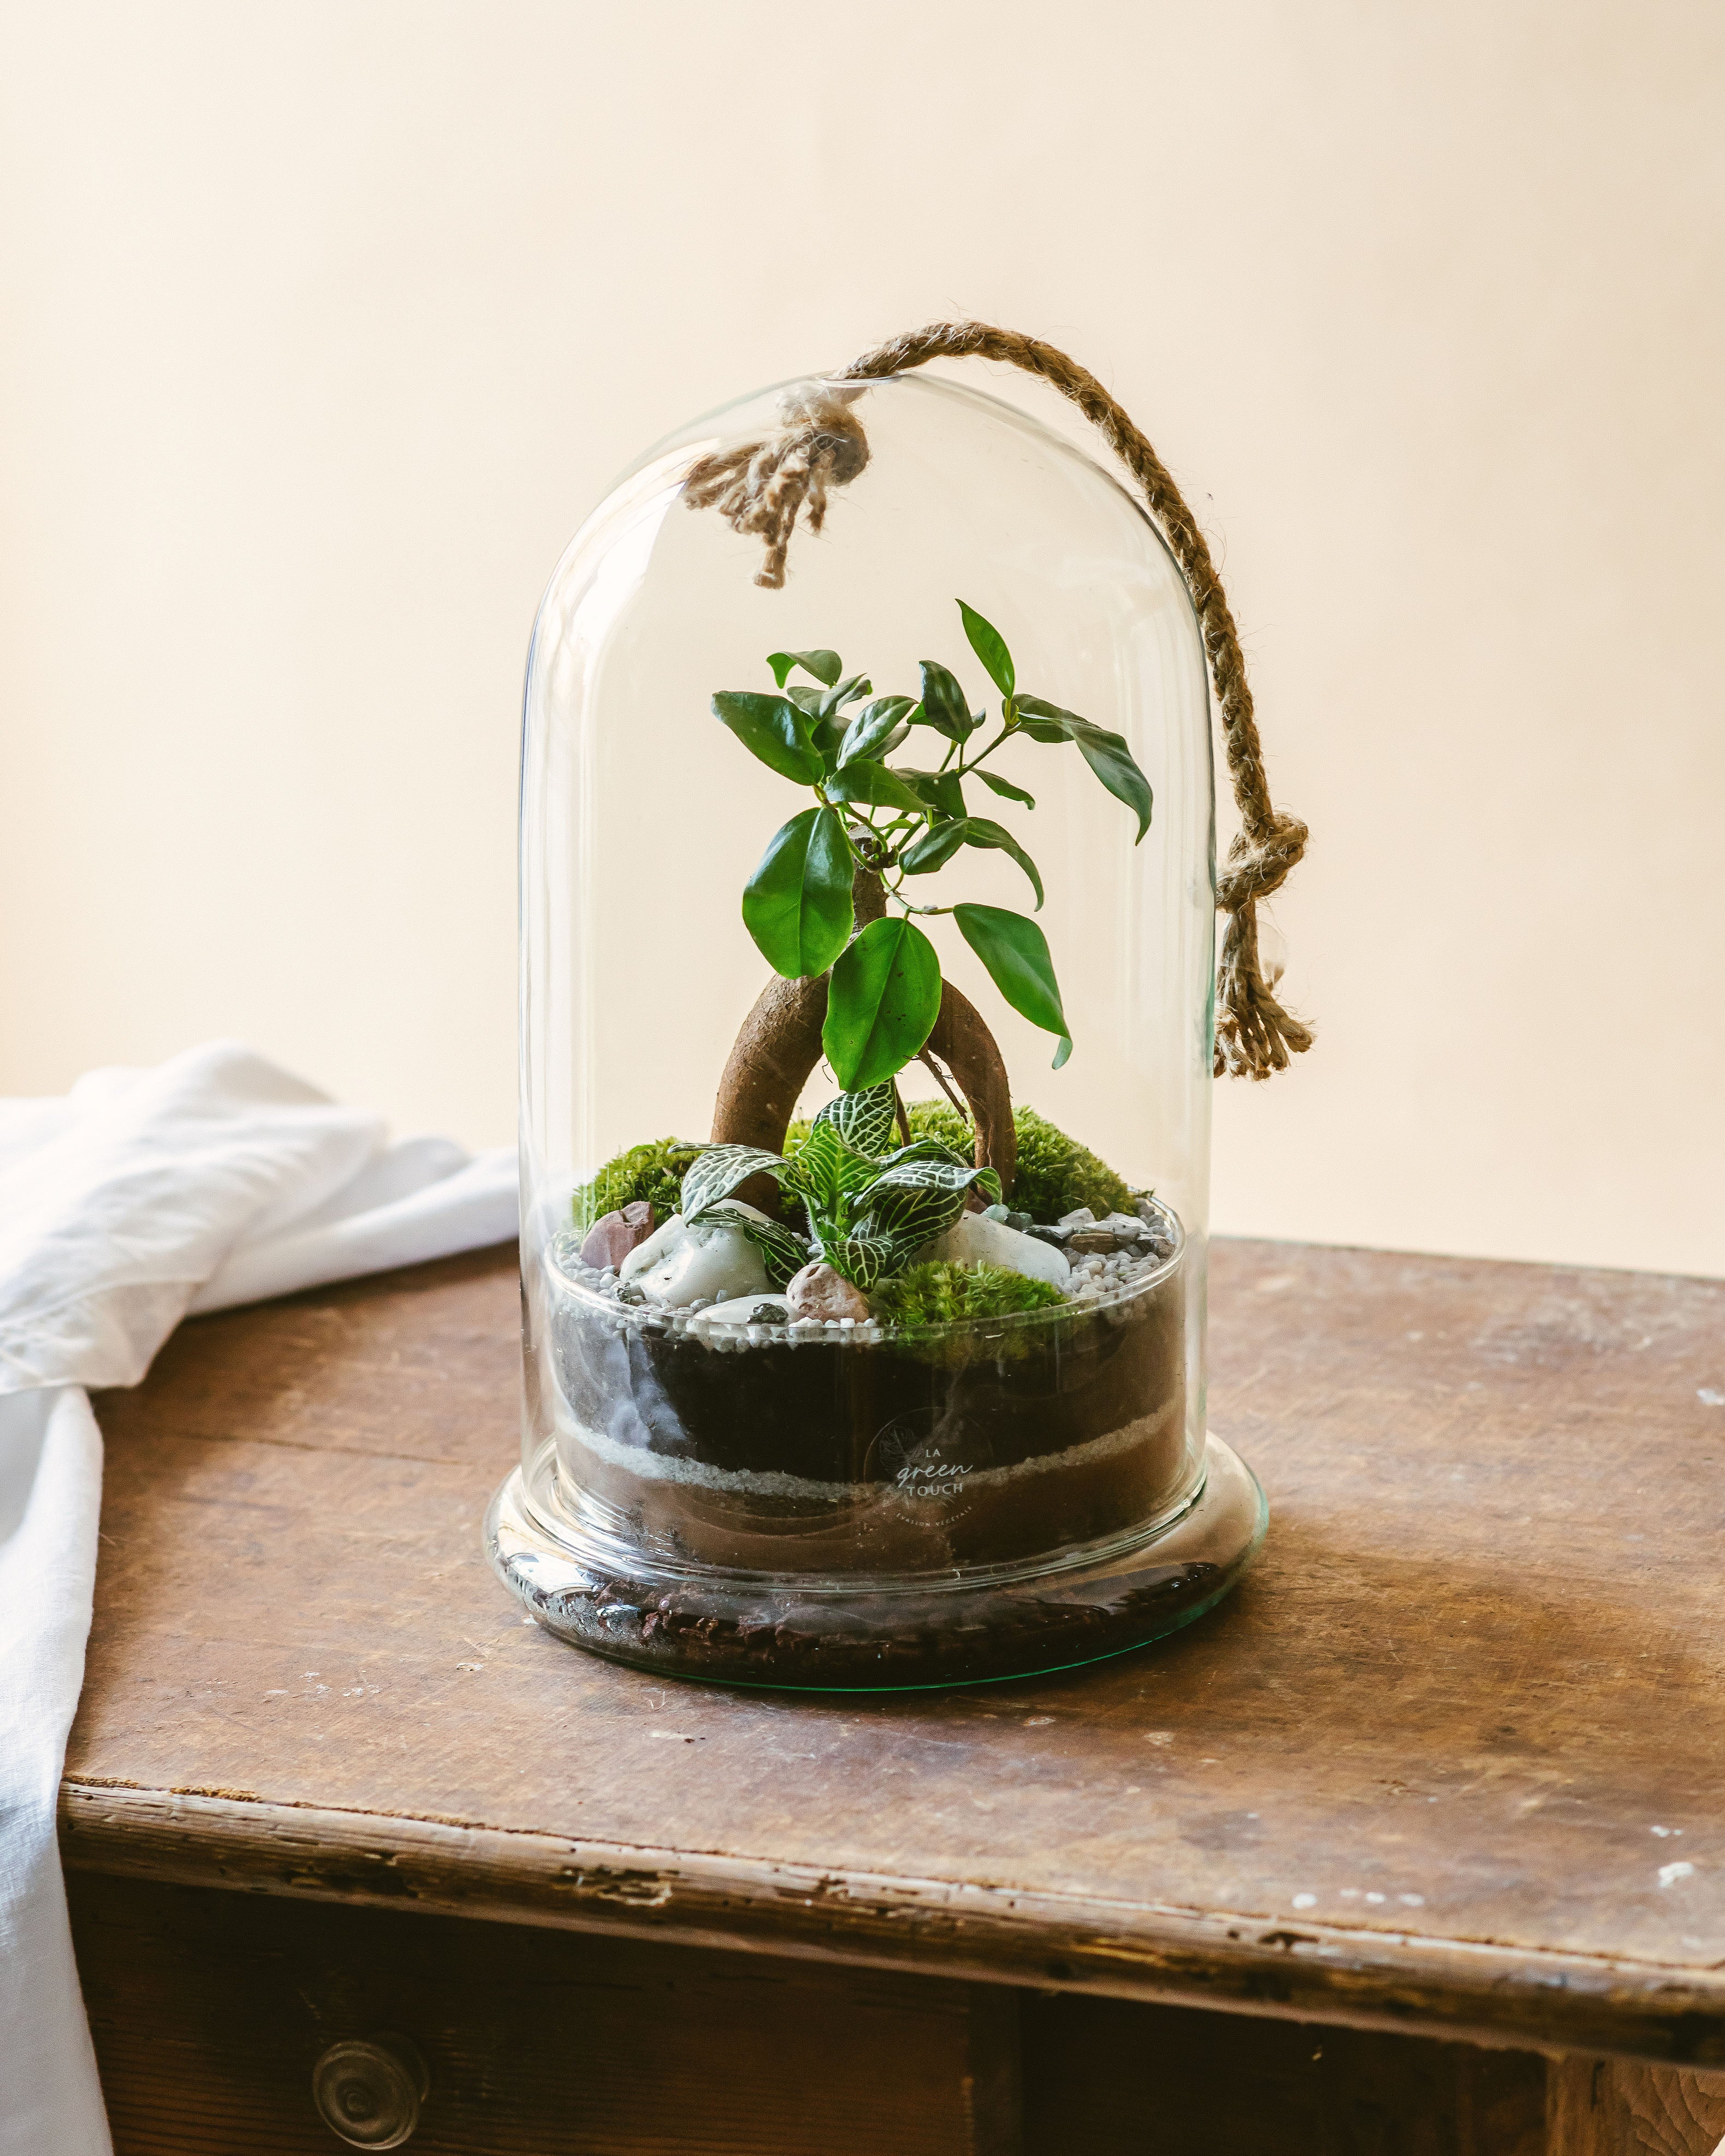 Composer son terrarium avec un Kit terrarium plante DIY – La Green